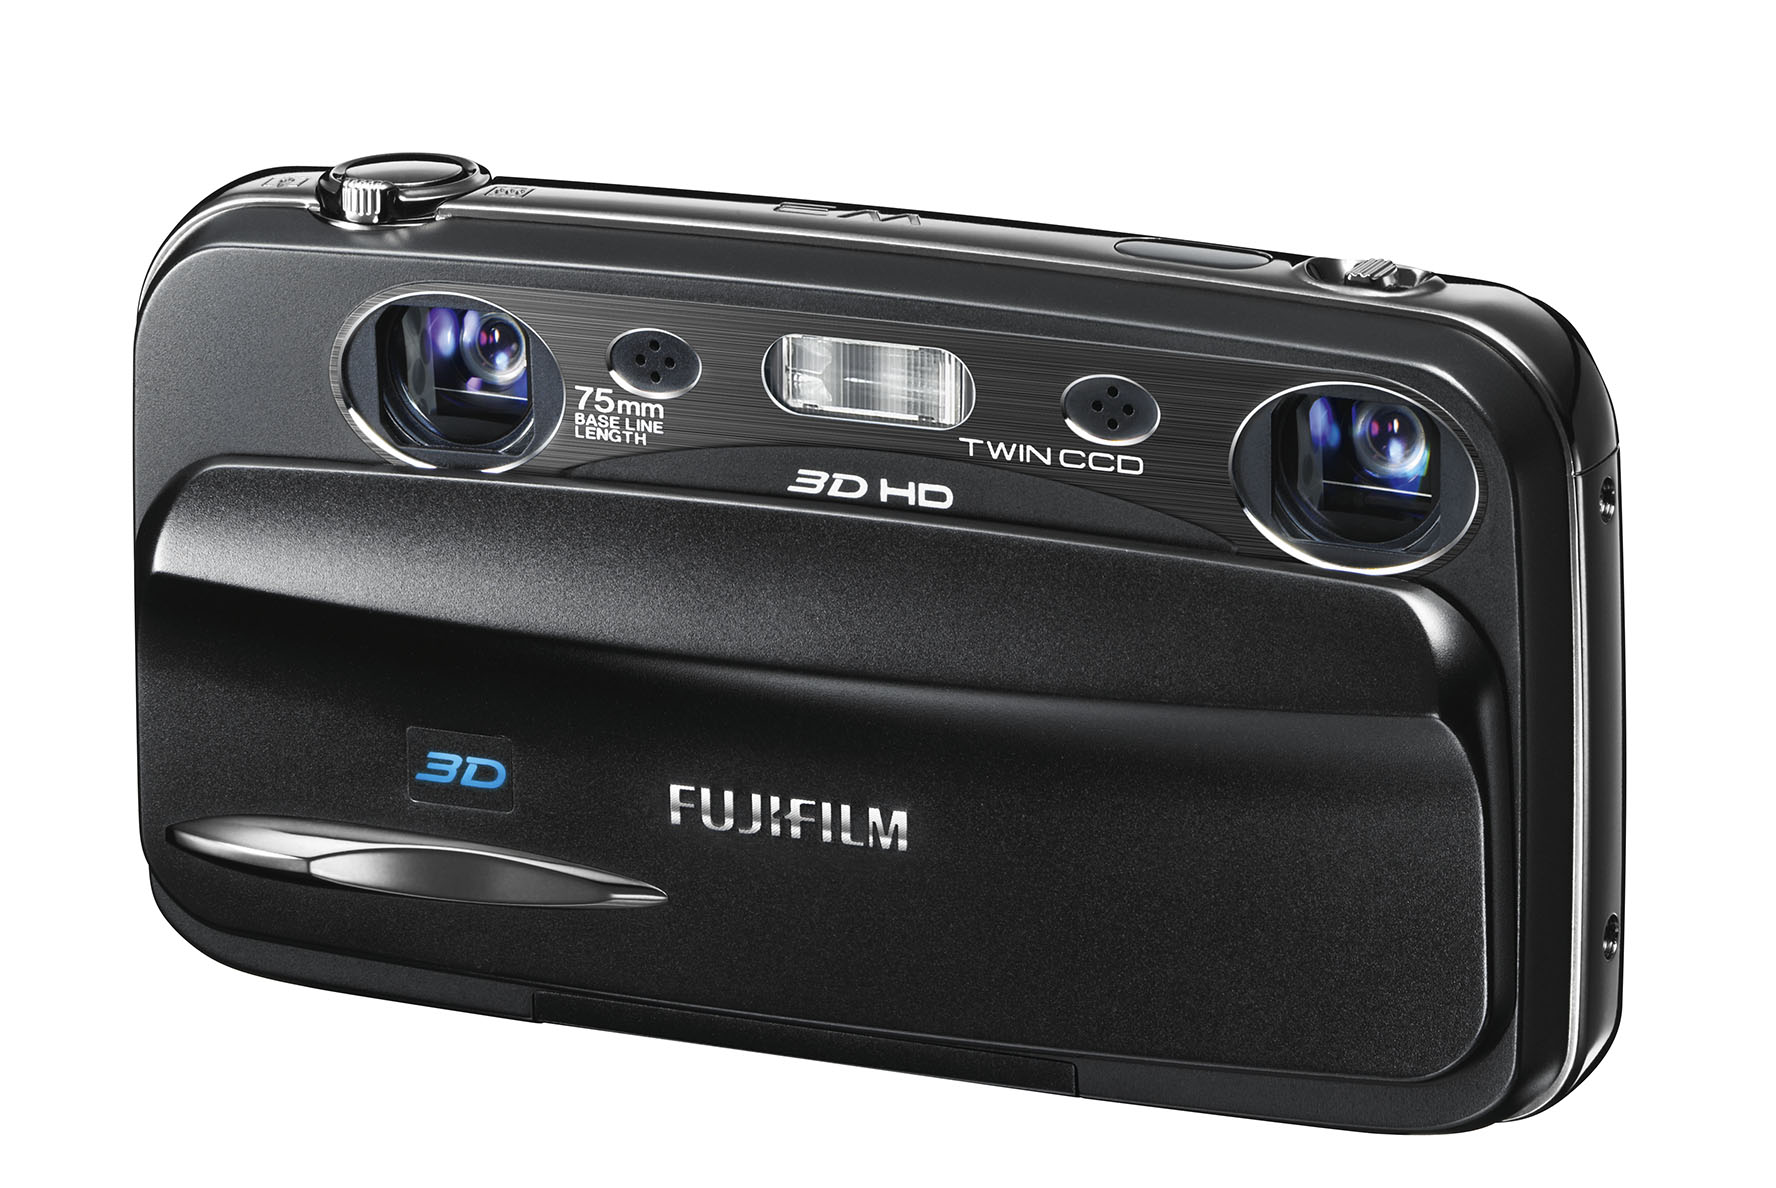 FujiFilm FinePix REAL 3D W3 digital camera shoots 720p 3D movies